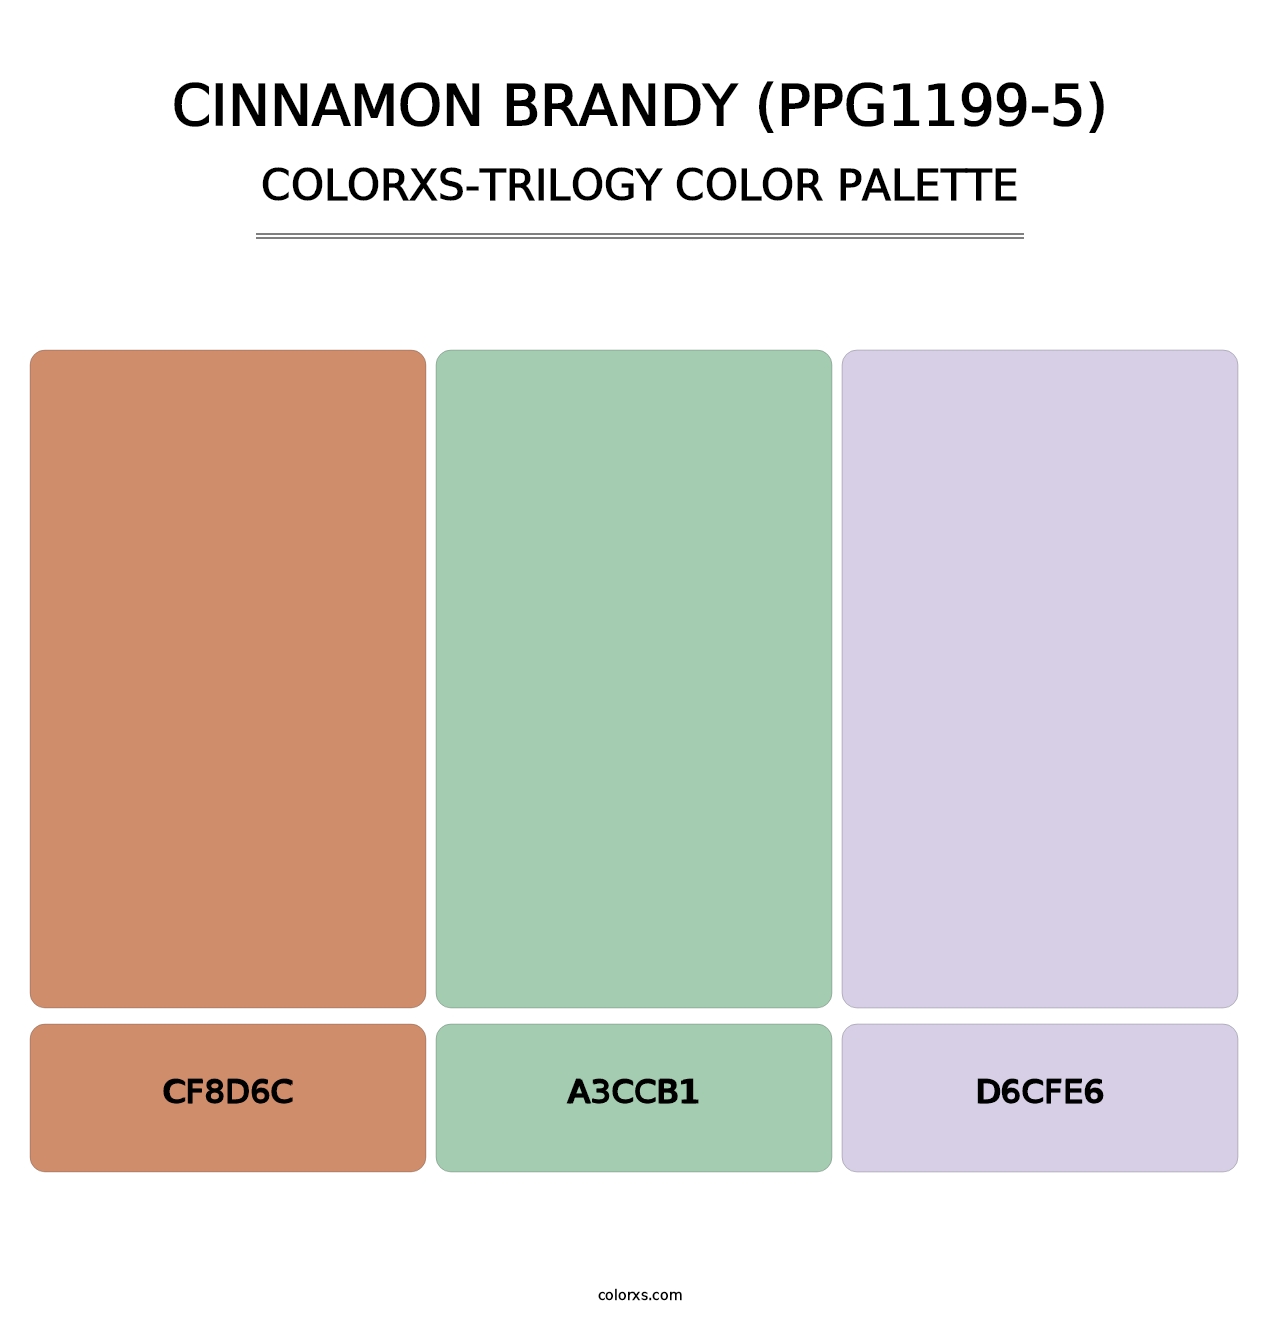 Cinnamon Brandy (PPG1199-5) - Colorxs Trilogy Palette